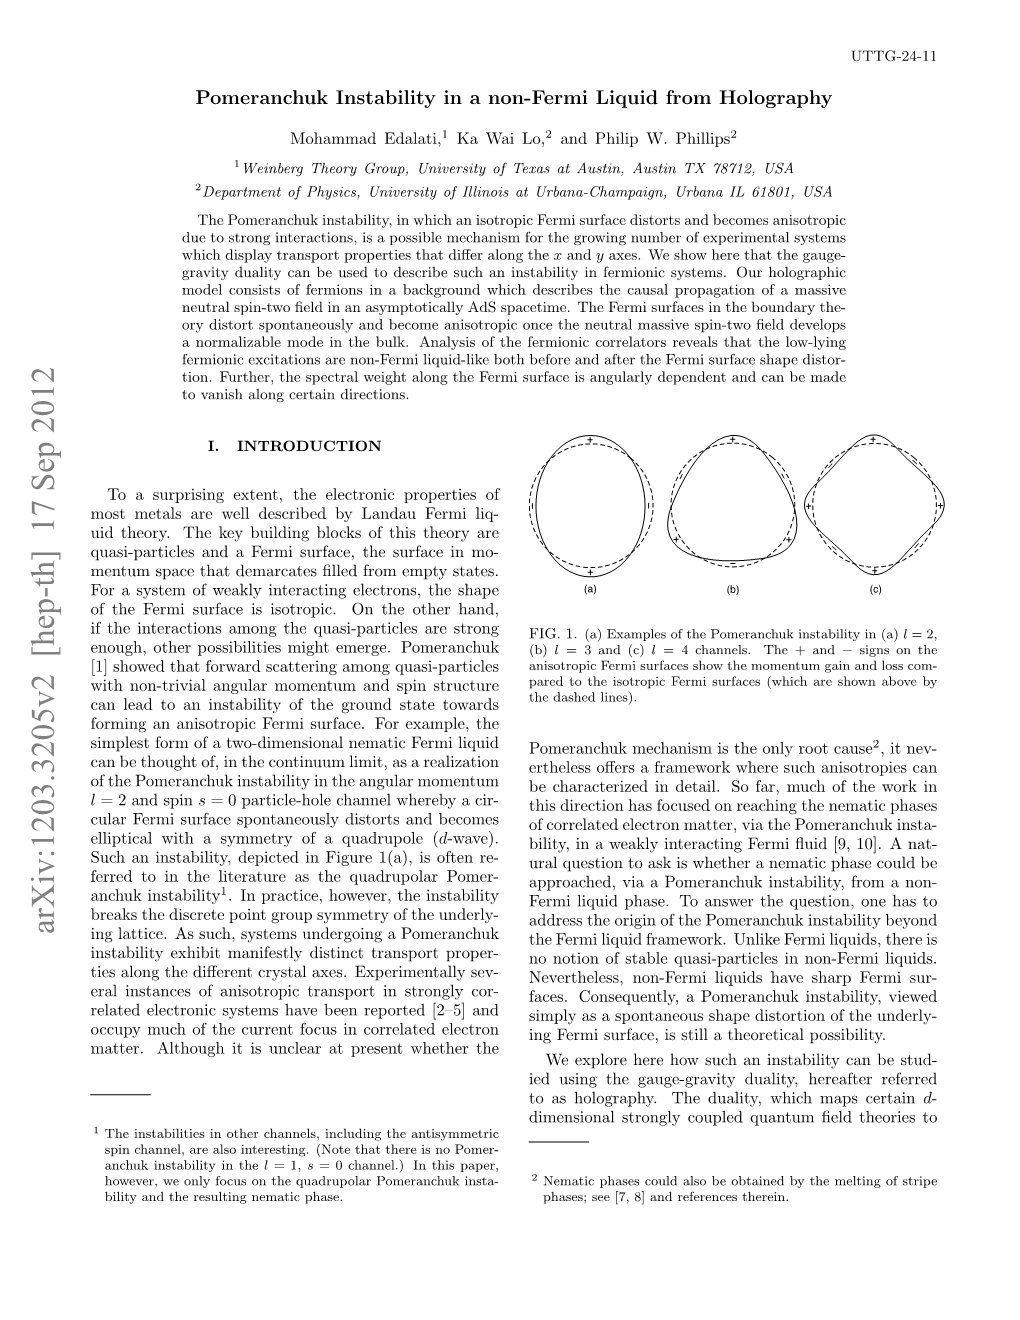 Pomeranchuk Instability in a Non-Fermi Liquid from Holography